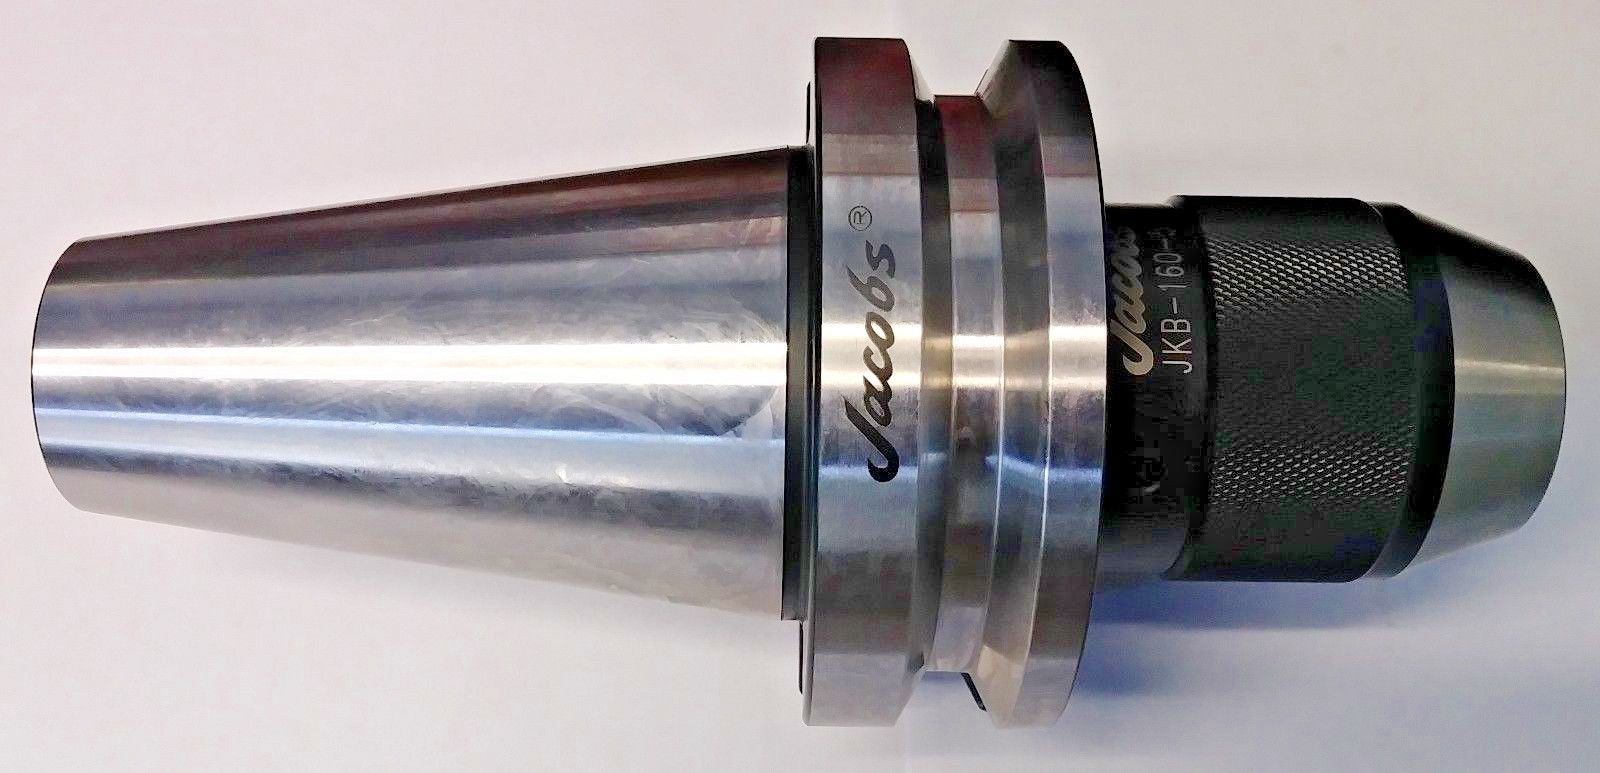 Jacobs 30544 JKB 160 - 50 3.0 - 16.0mm High Torque Precision Keyless Chuck